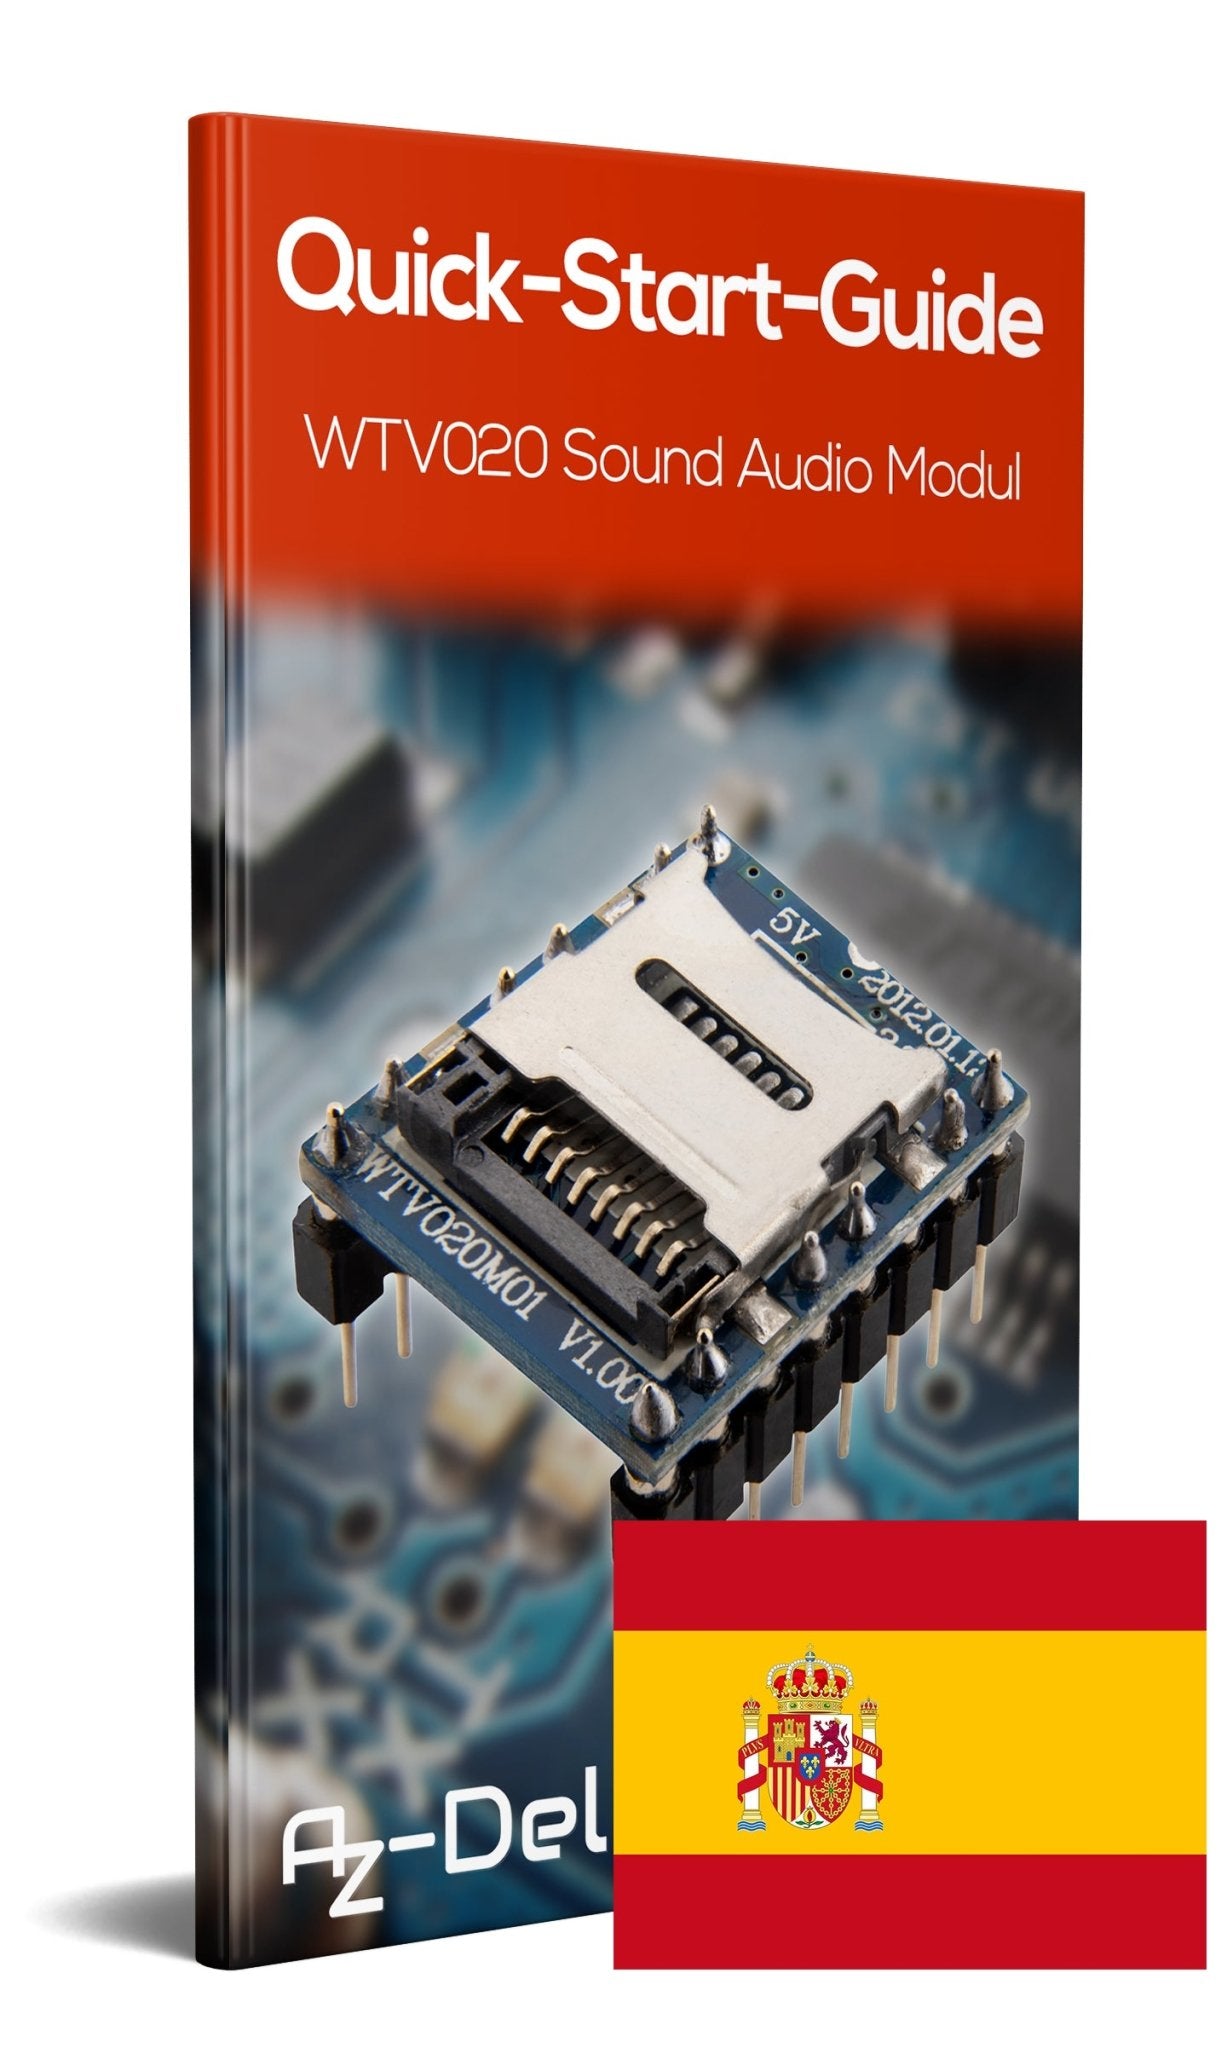 WTV020 Sound Audio Modul SD Card - AZ-Delivery